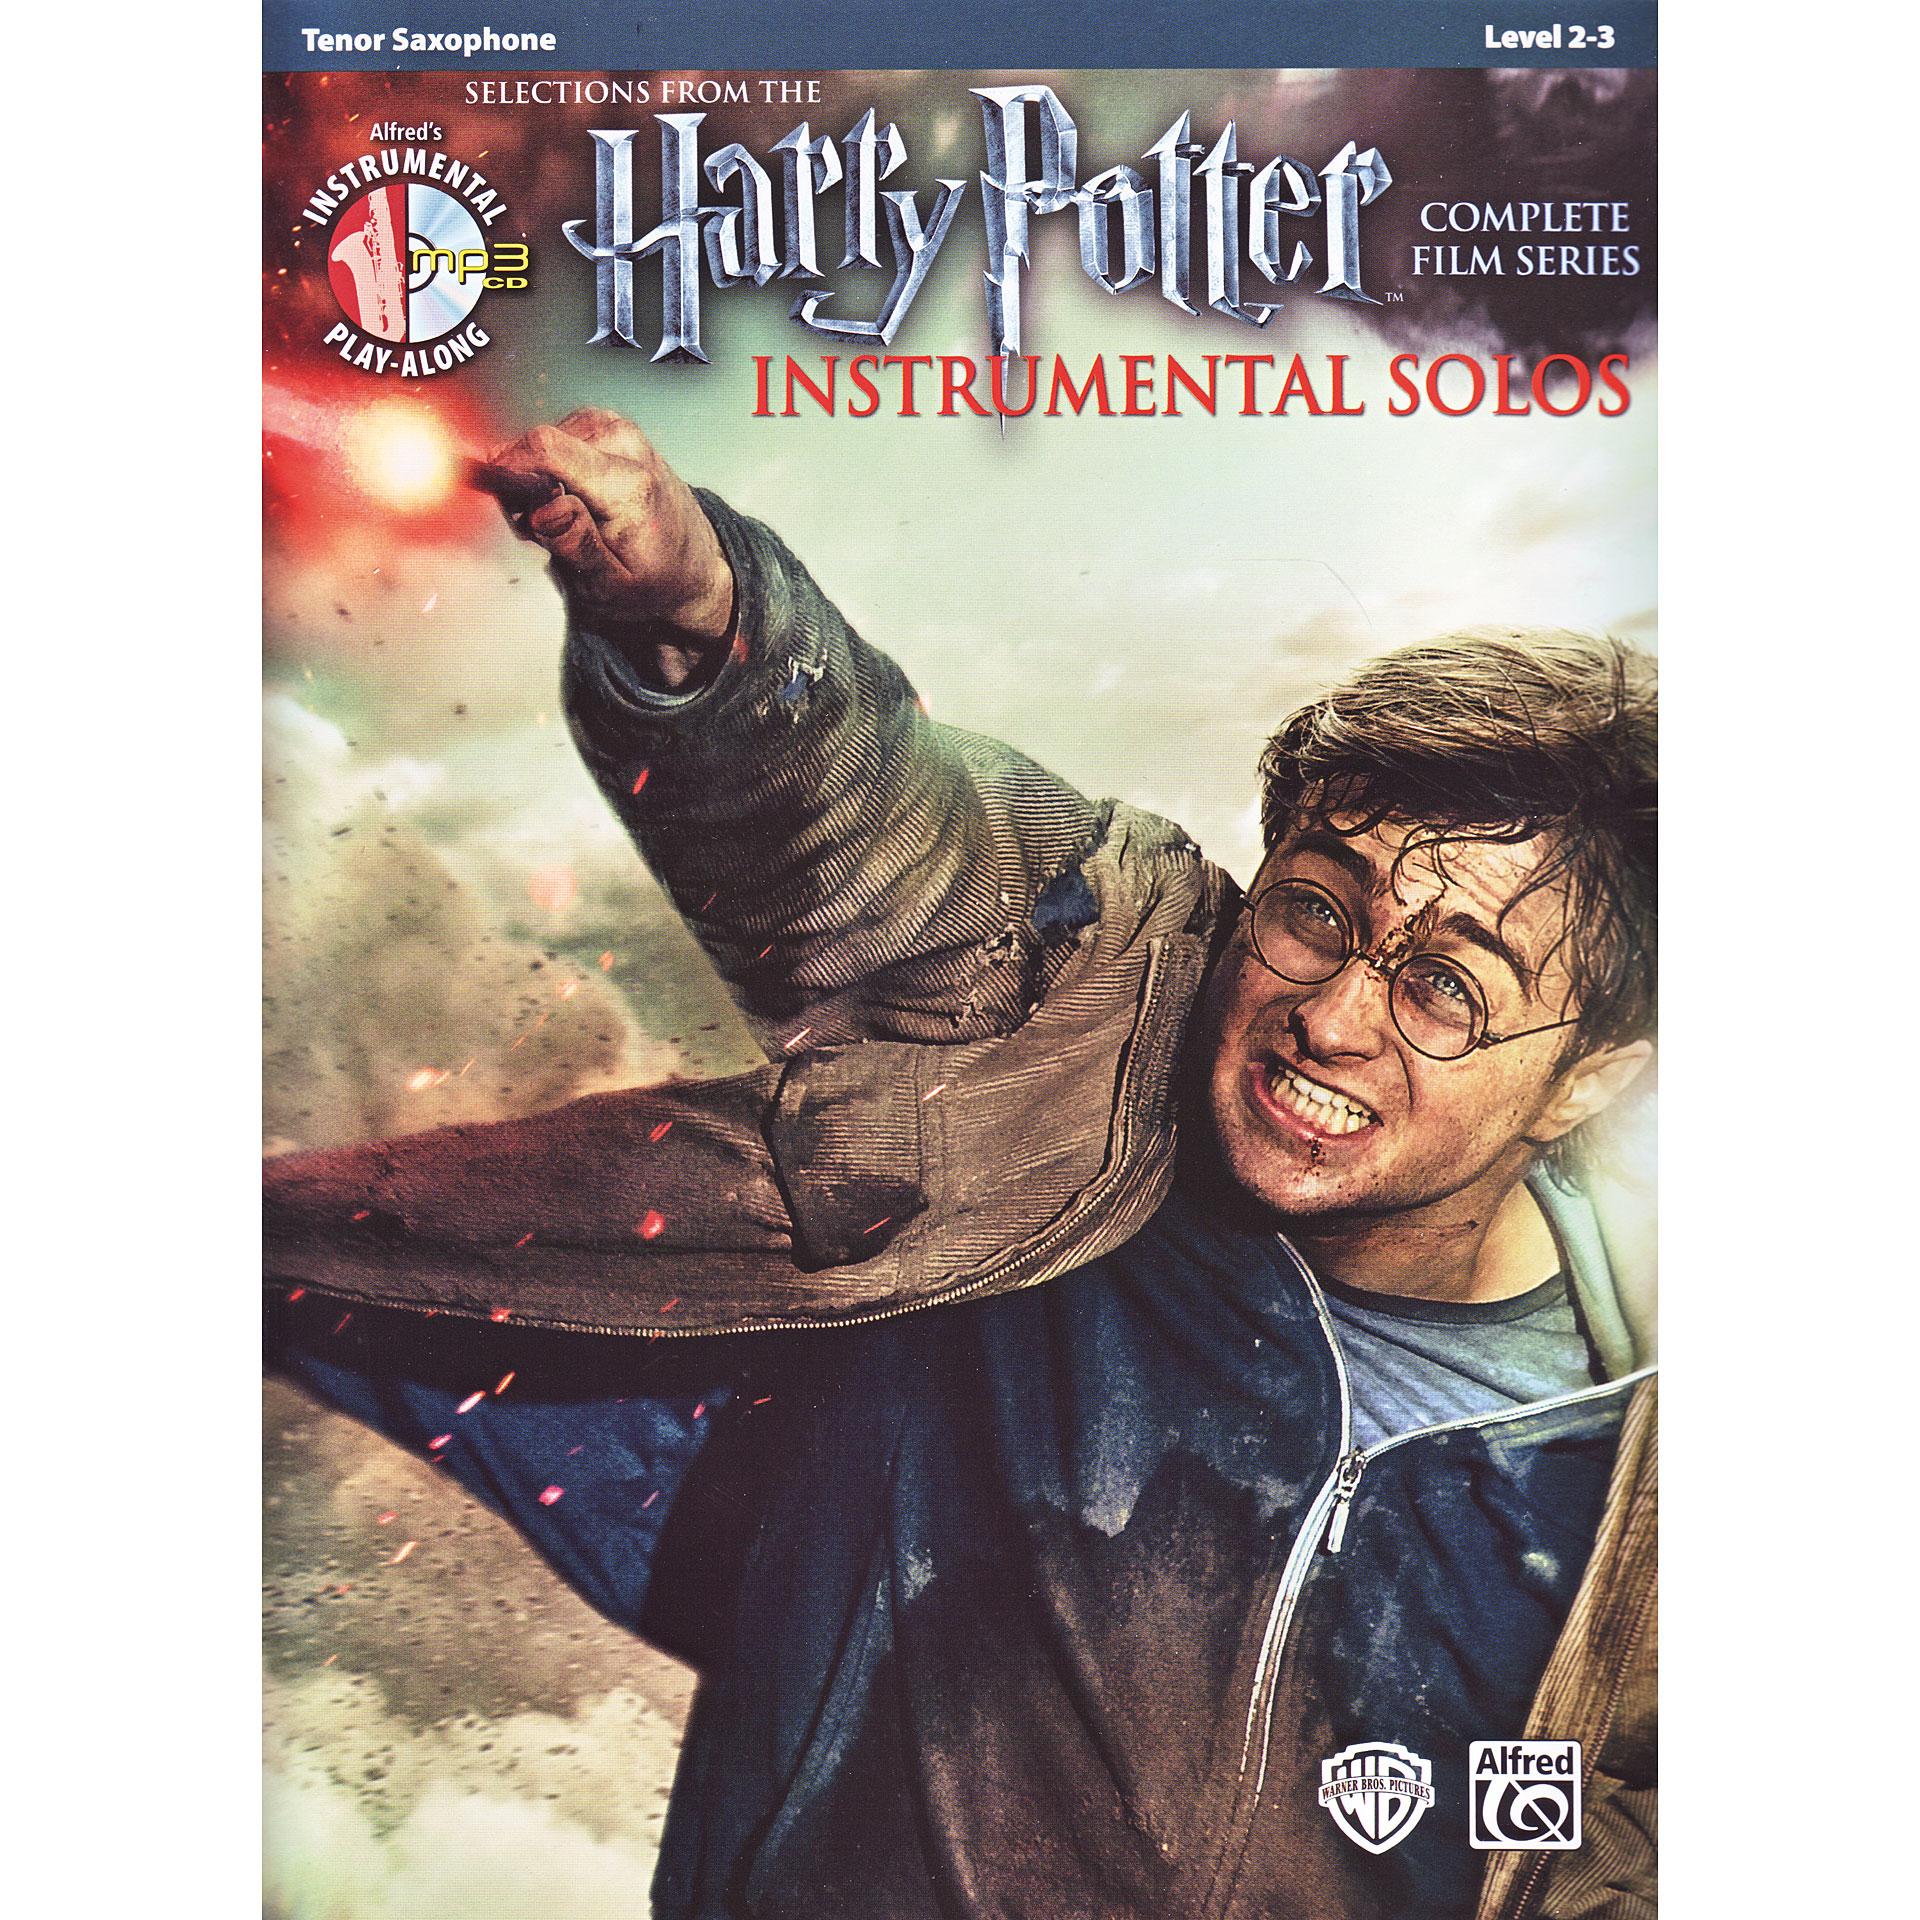 Foto Alfred KDM Harry Potter Instrumental Solos Complete Film Series,